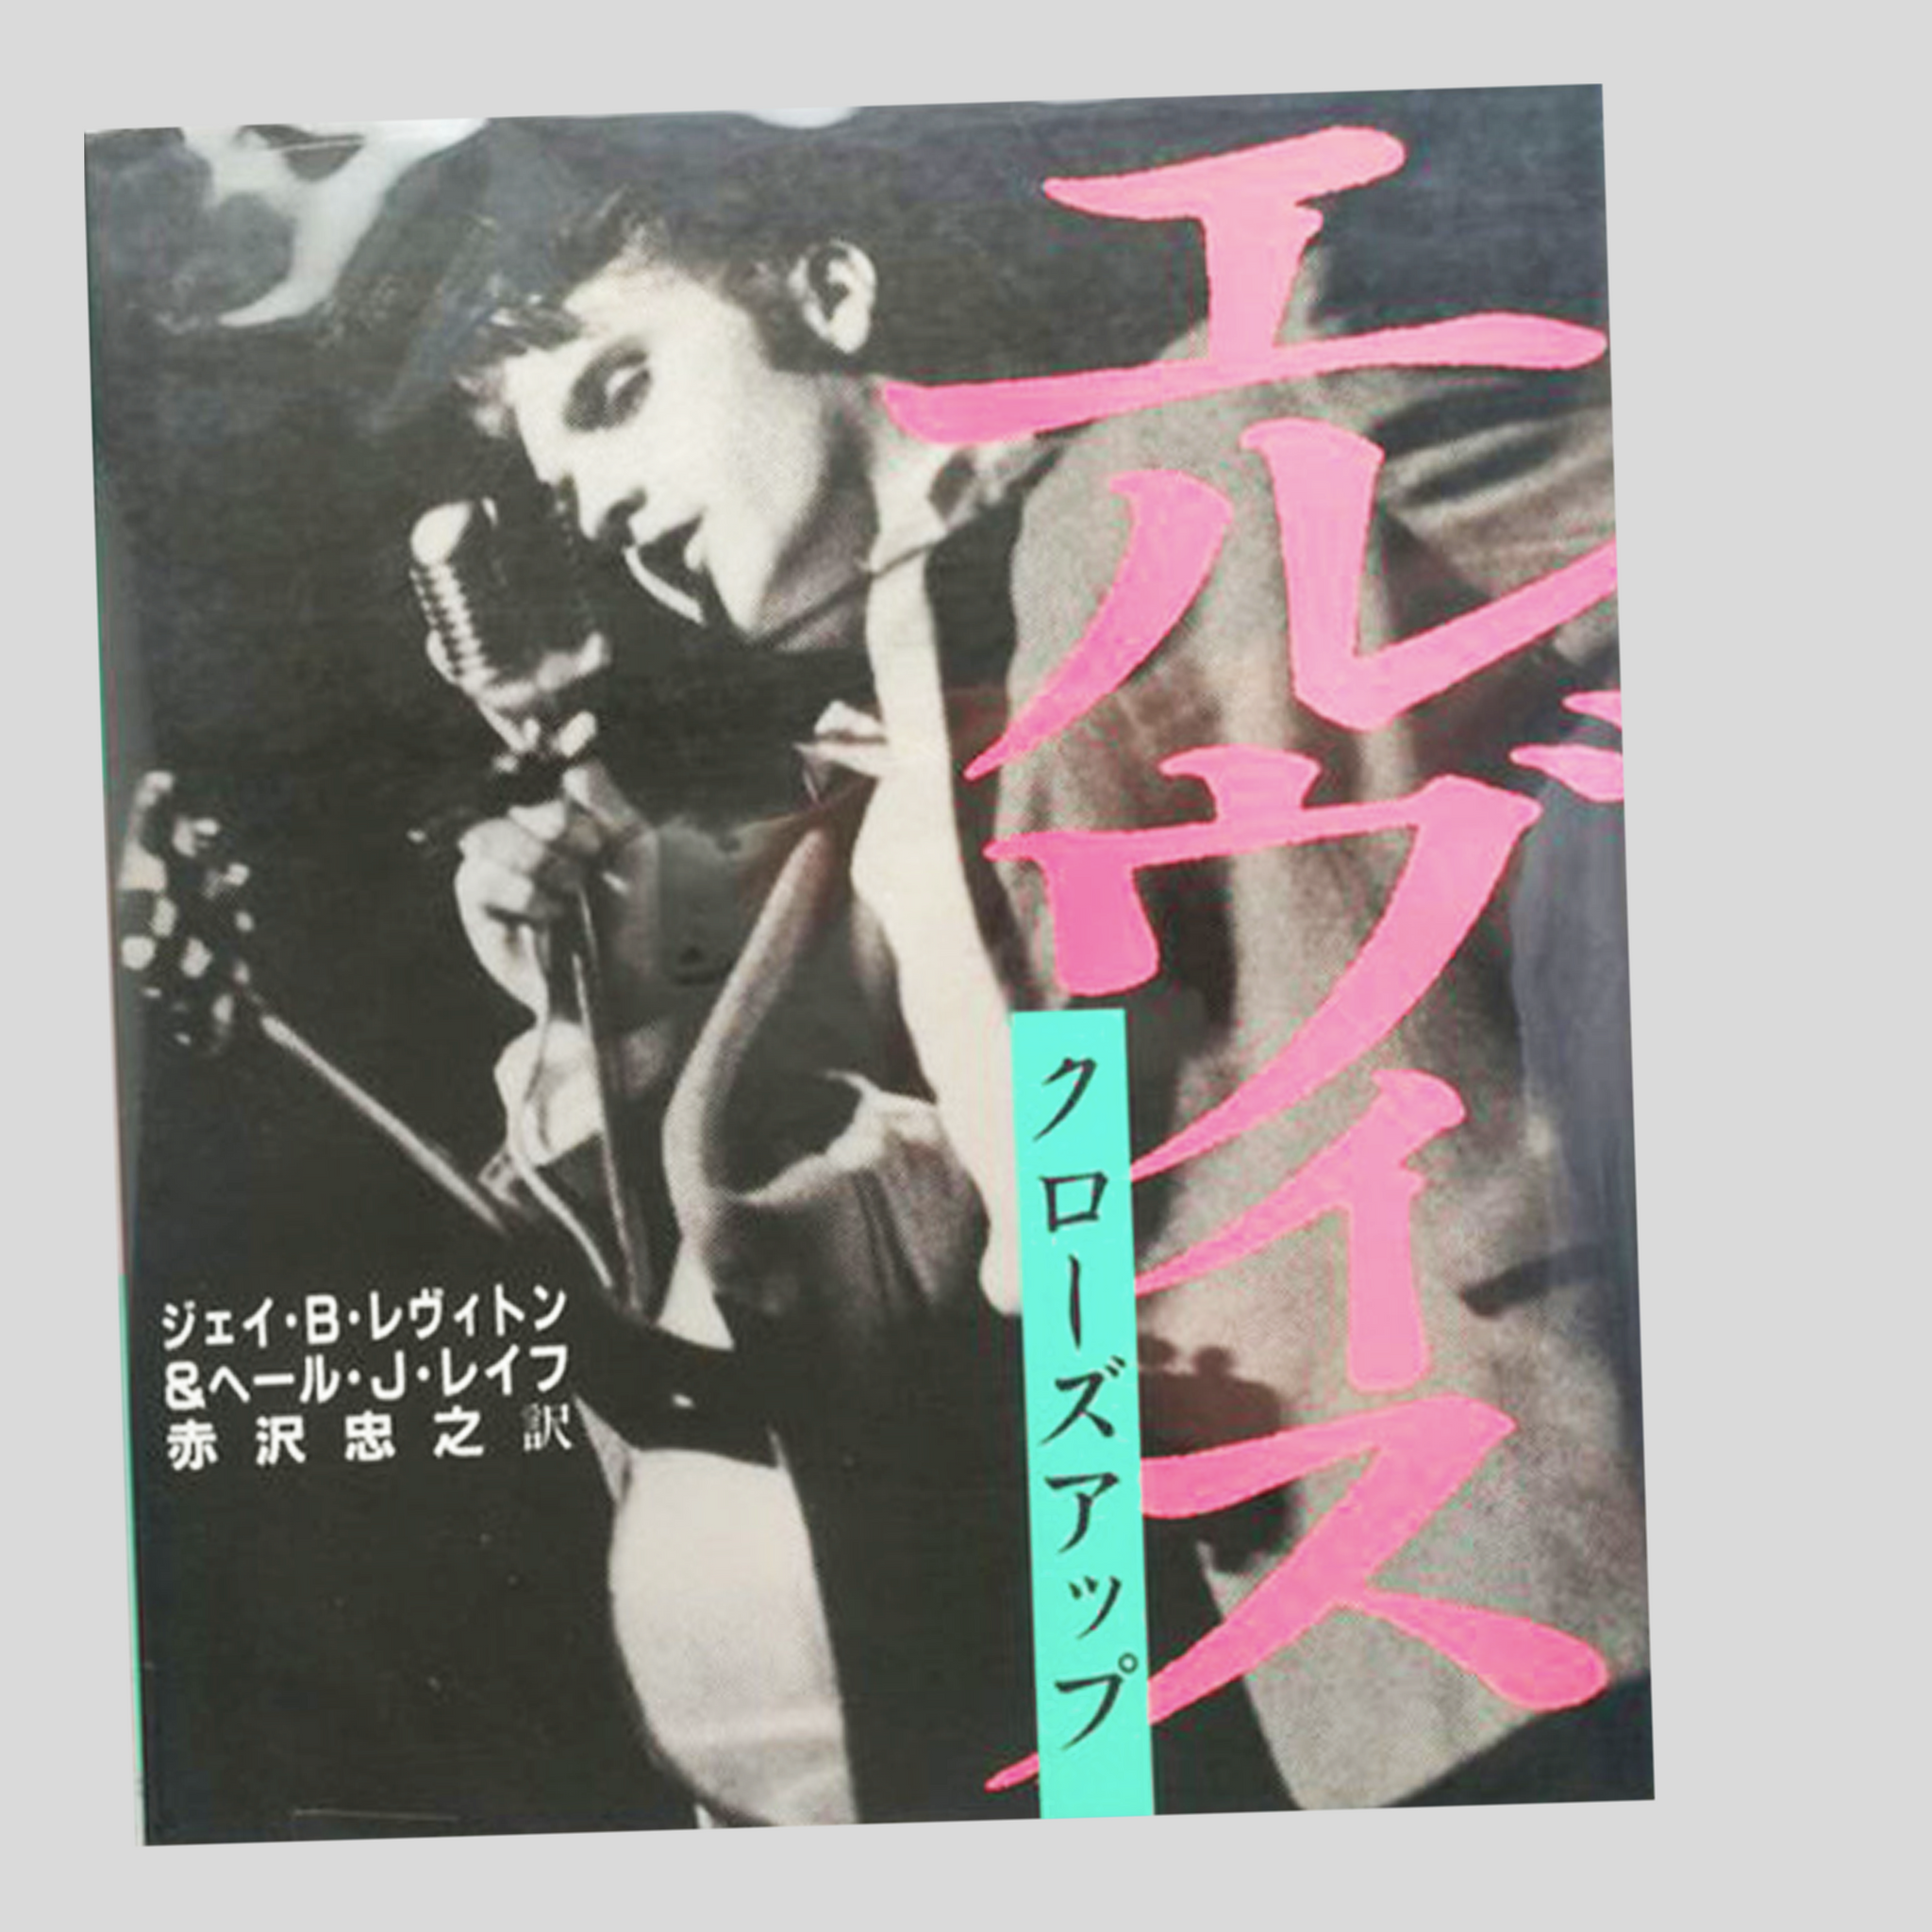 Elvis, Close-up [Japanese edition] - Jay B. Leviton & Ger J. Rijff